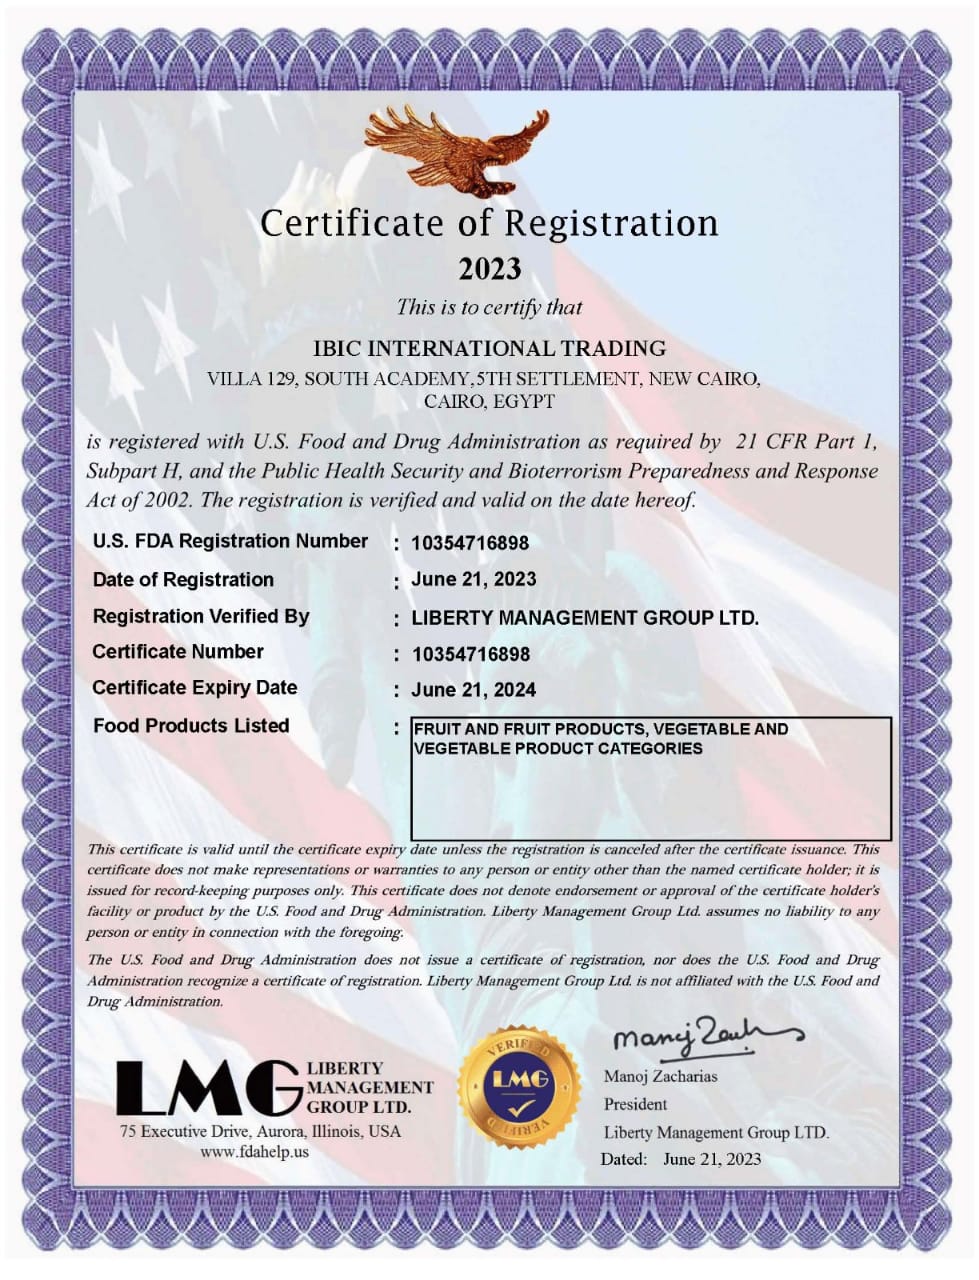 USA FDA Certificate